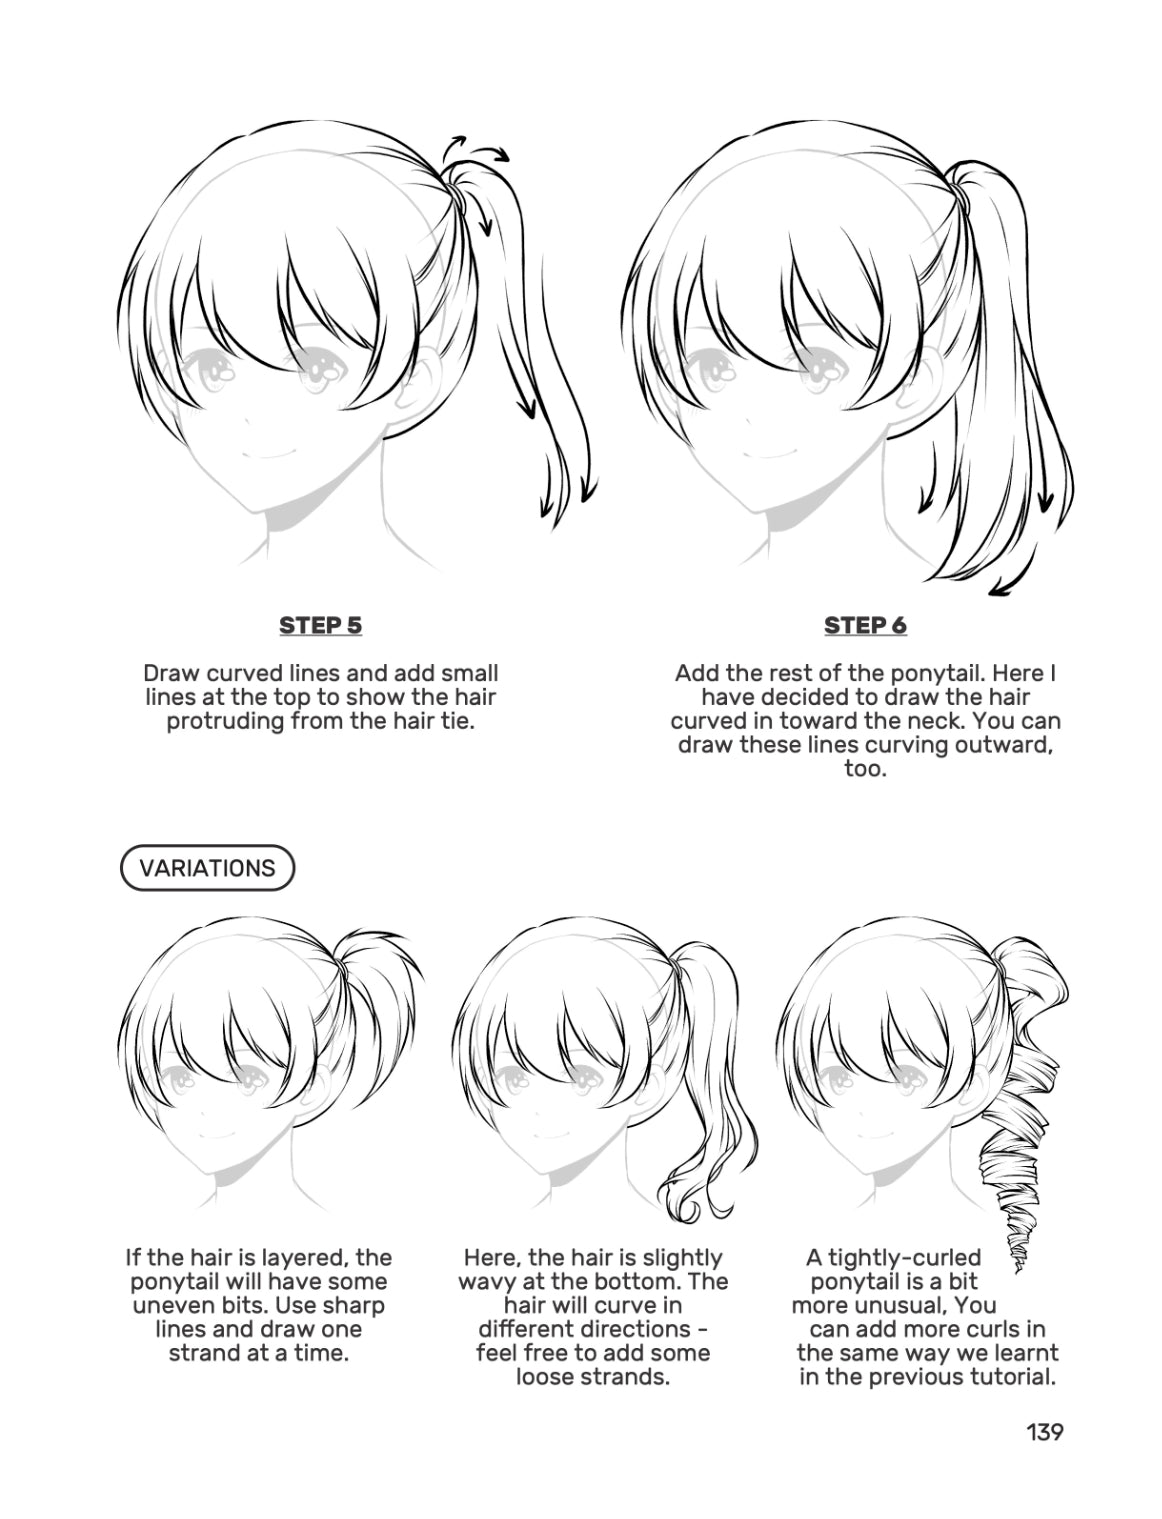 How to draw manga style hair step by step by FUKURÔCómics - Make